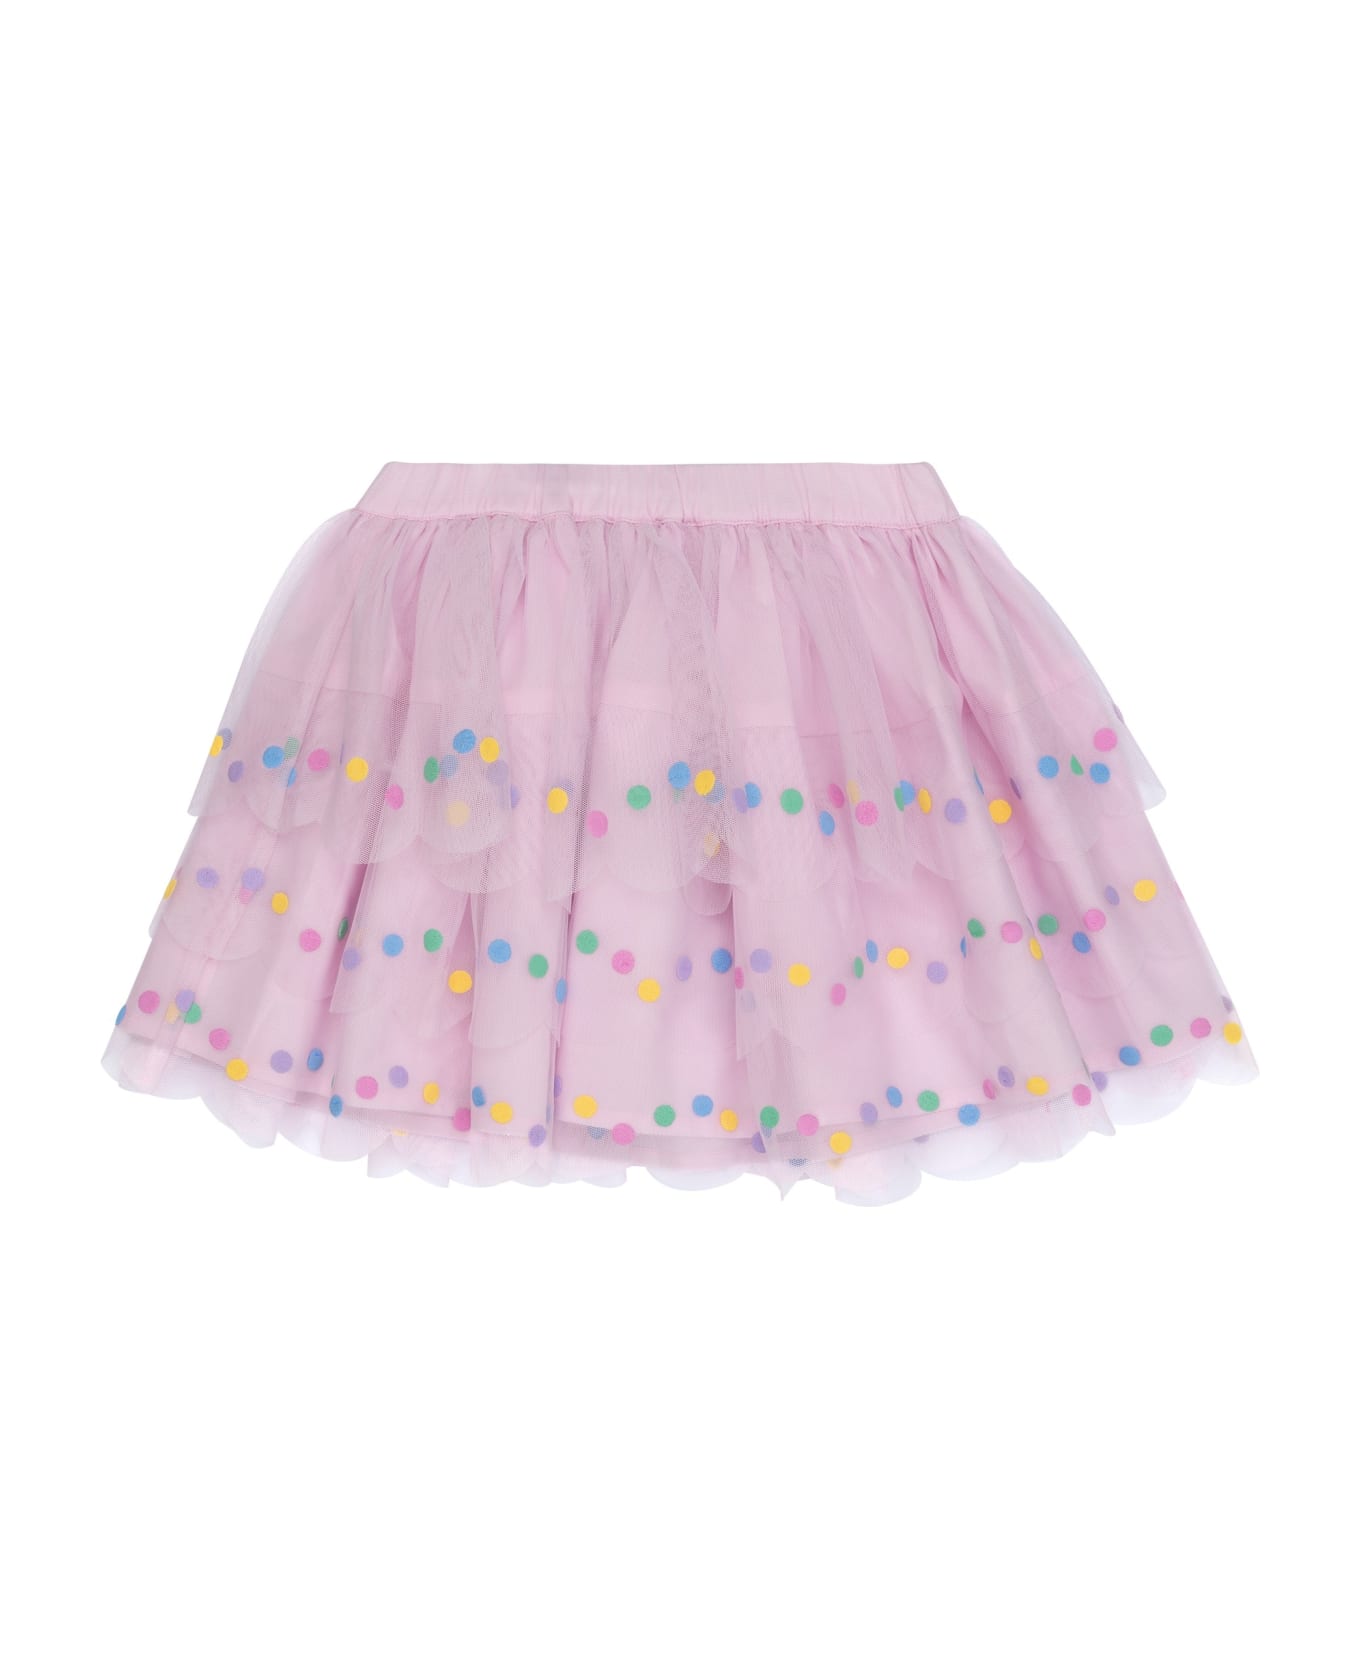 Stella McCartney Kids Confetti Polka Dot Skirt - Lilla